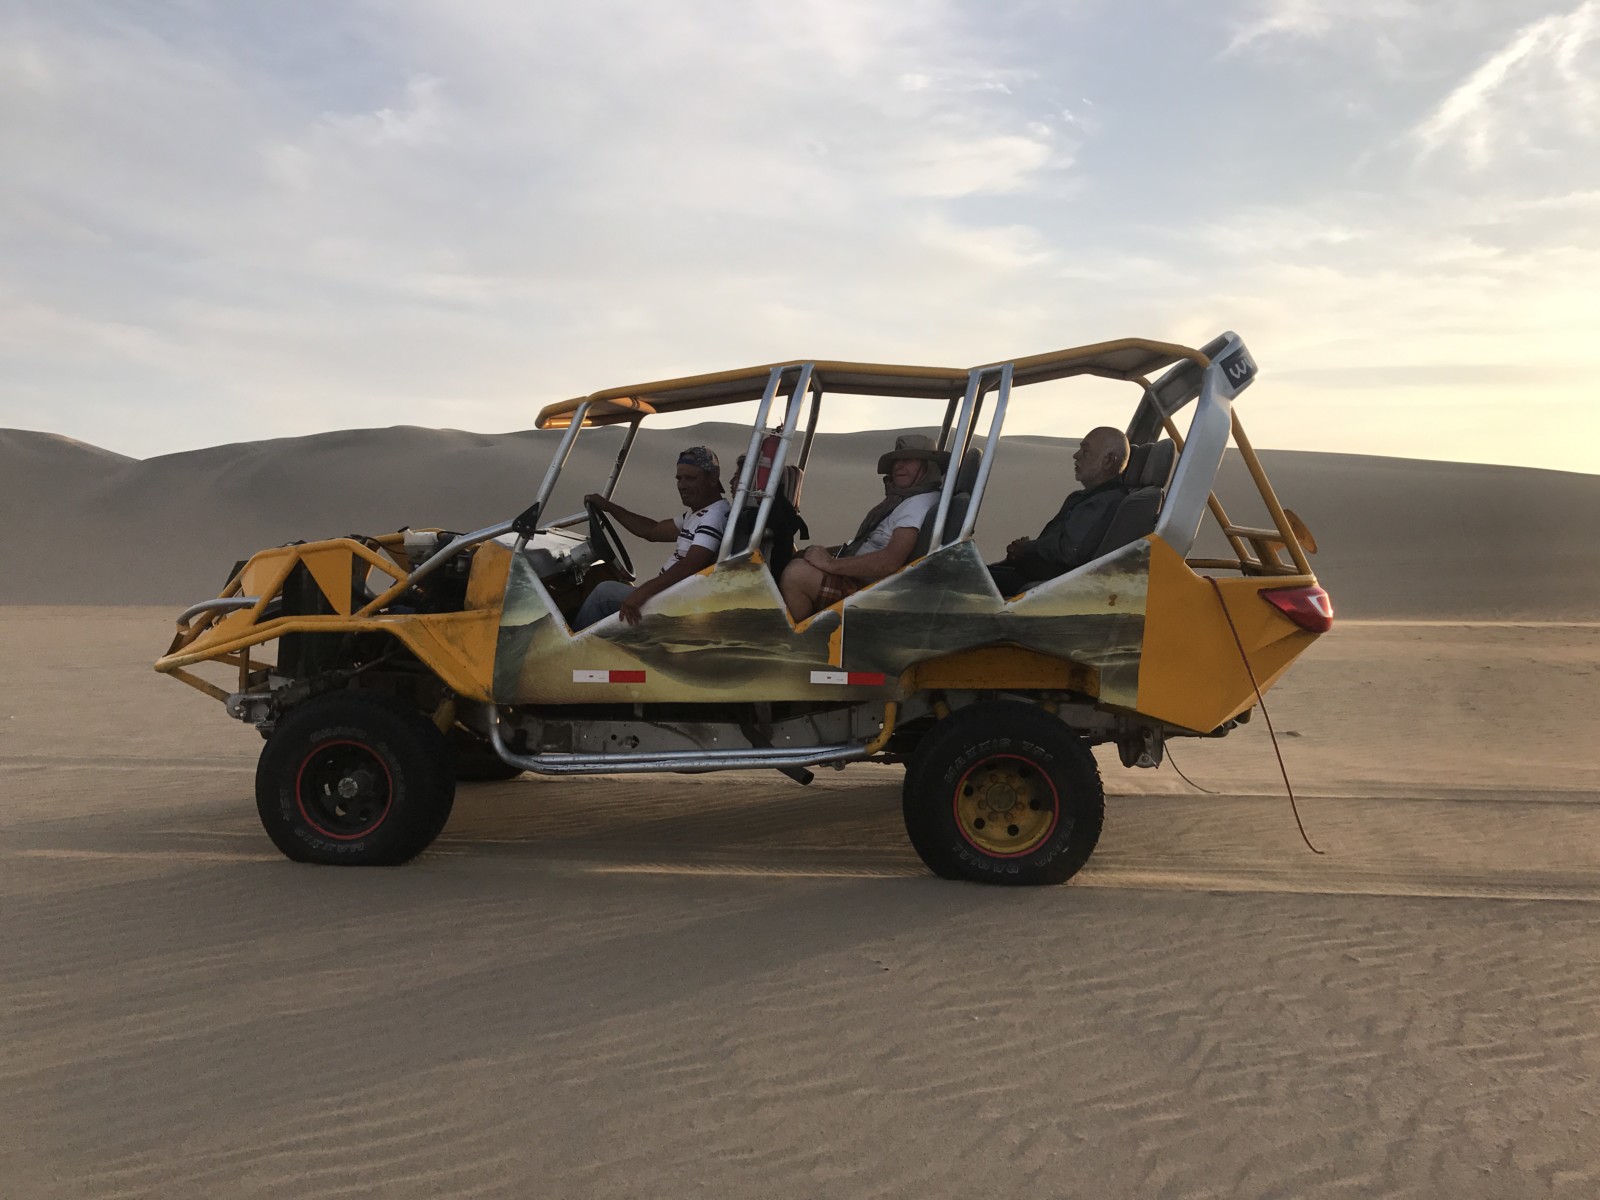 Dune buggy and sandboarding in Huacachina